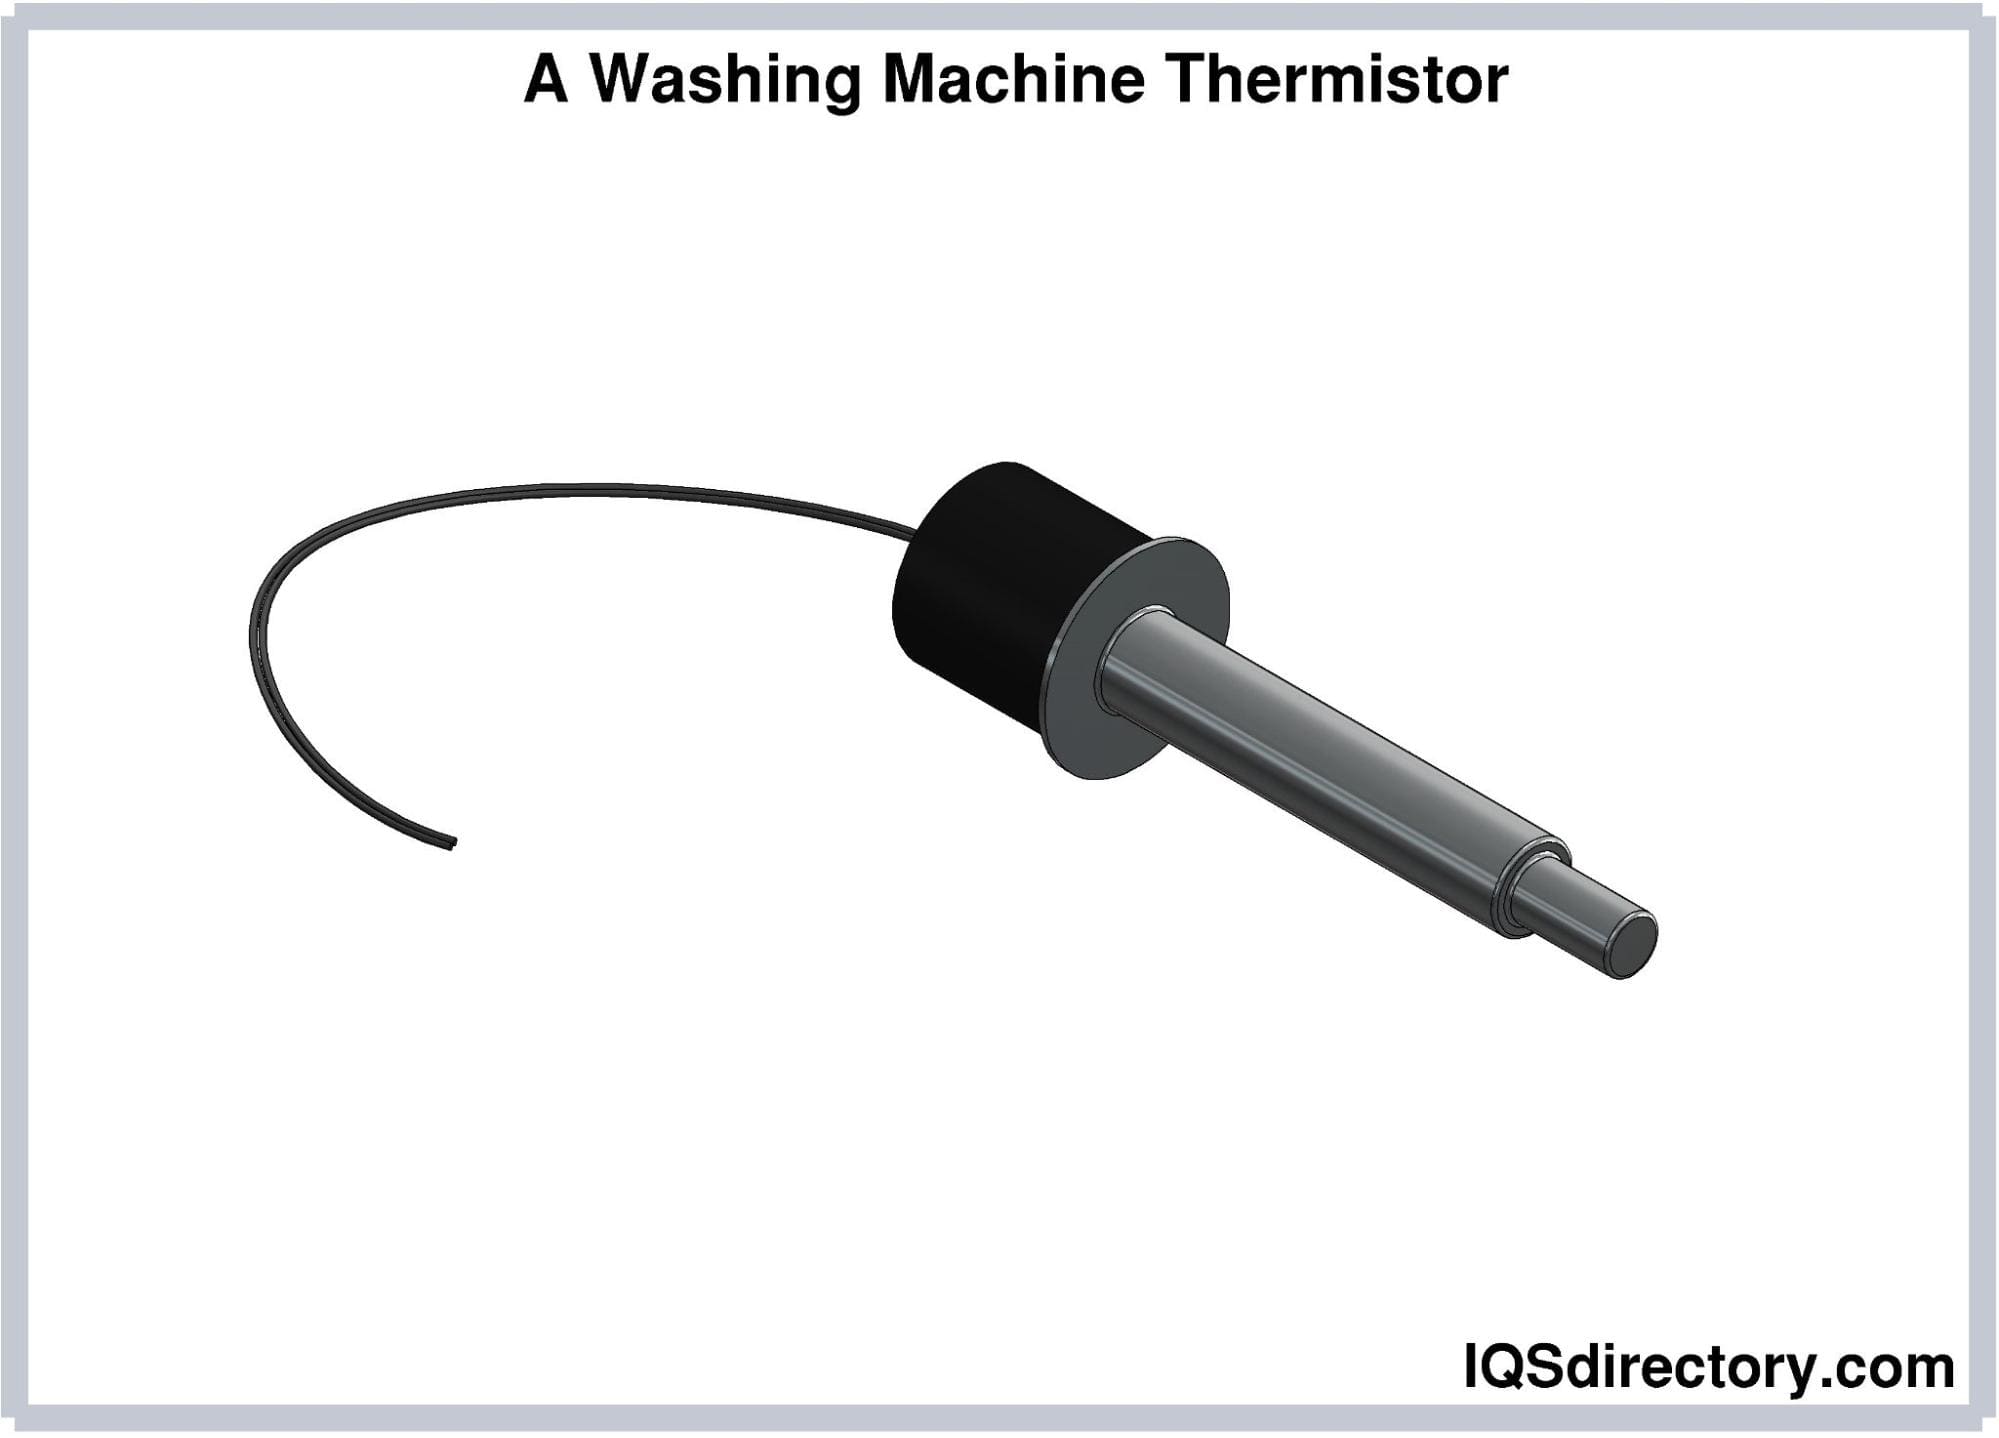 A Washing Machine Thermistor